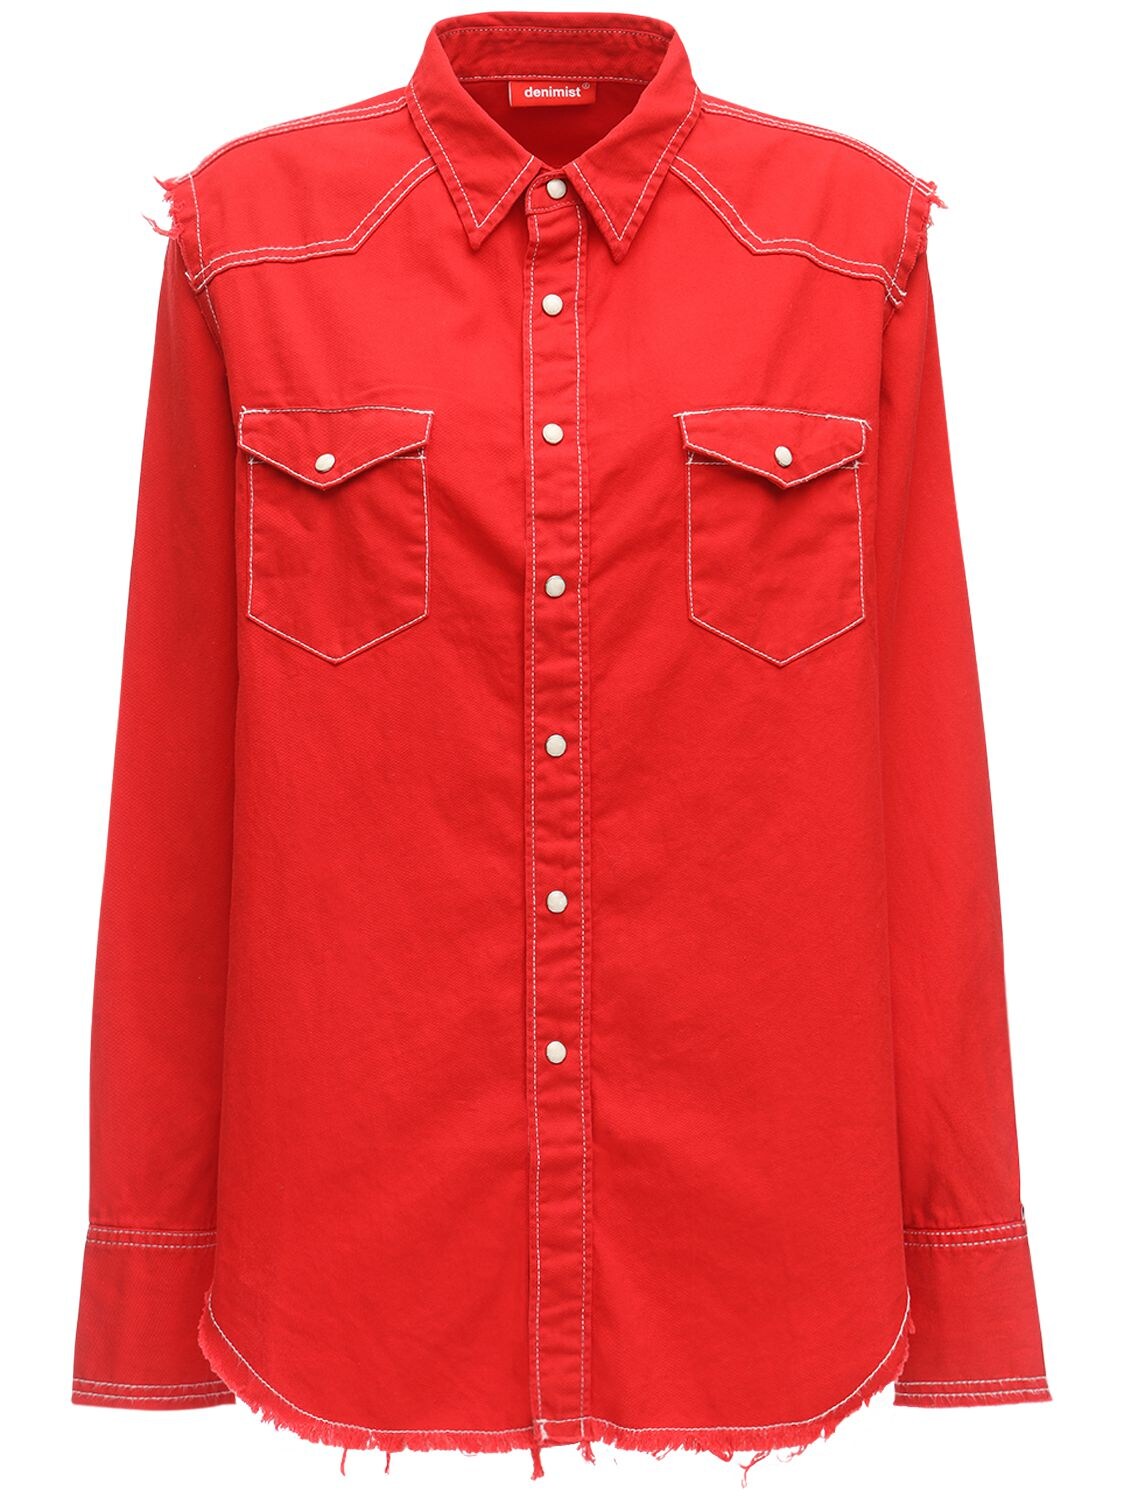 Denimist Oversize Cotton Cowboy Shirt In Red